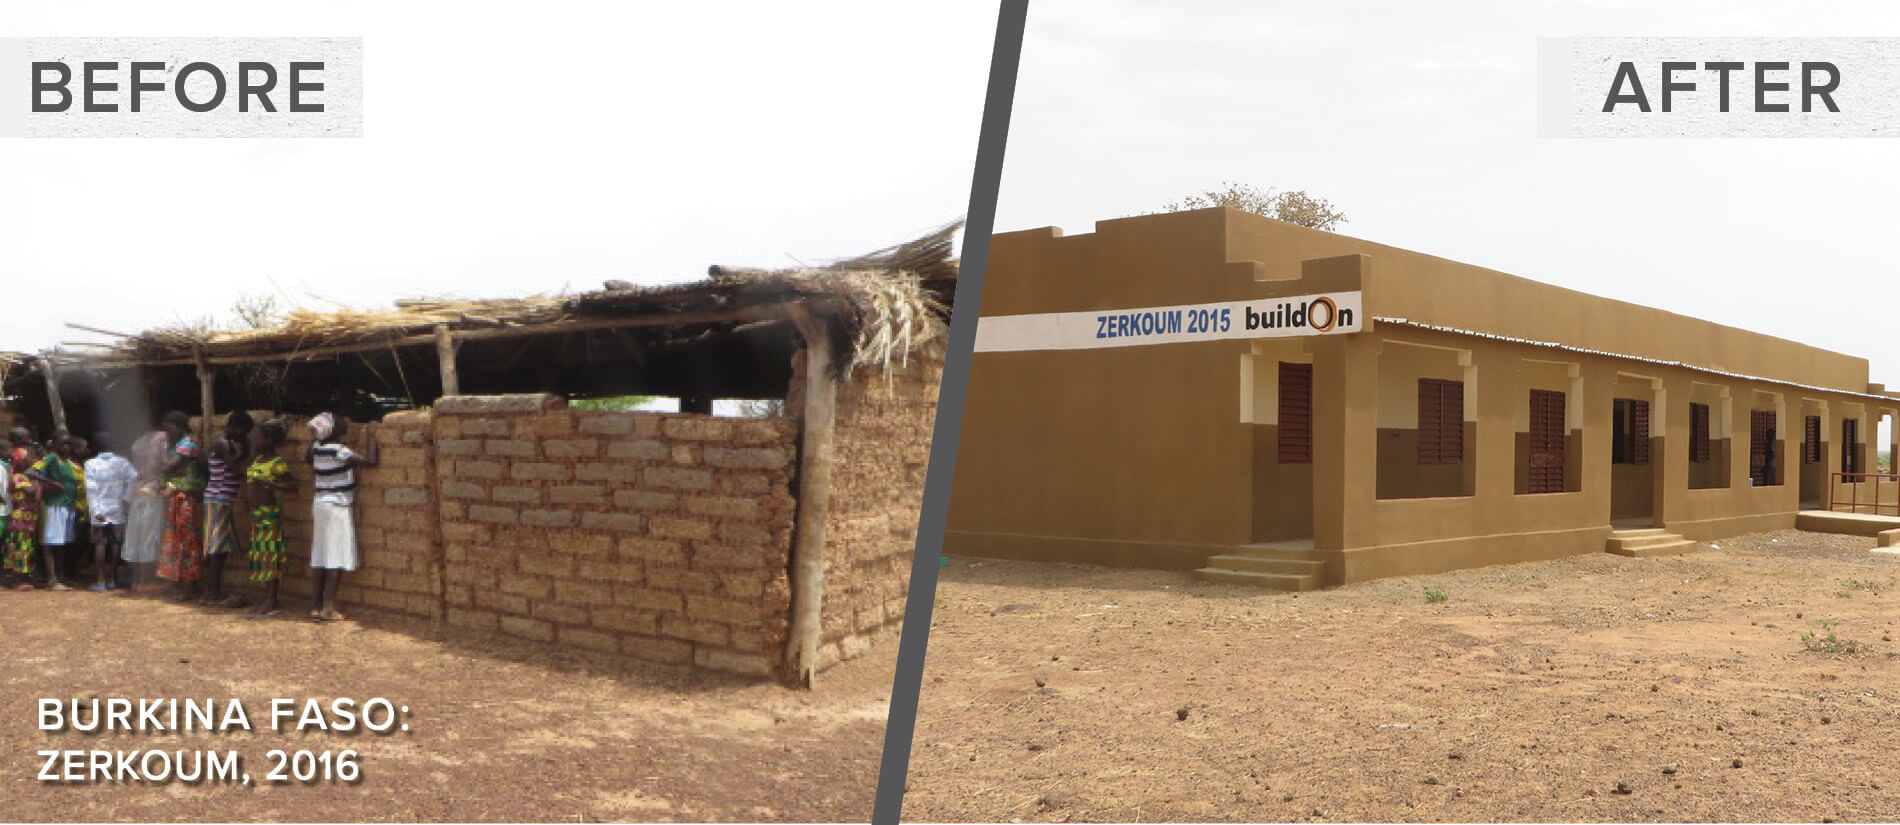 buildOn - Zerkoum, Burkina Faso - Before and After_1900x825 - Dual Concept - 2021 (1)